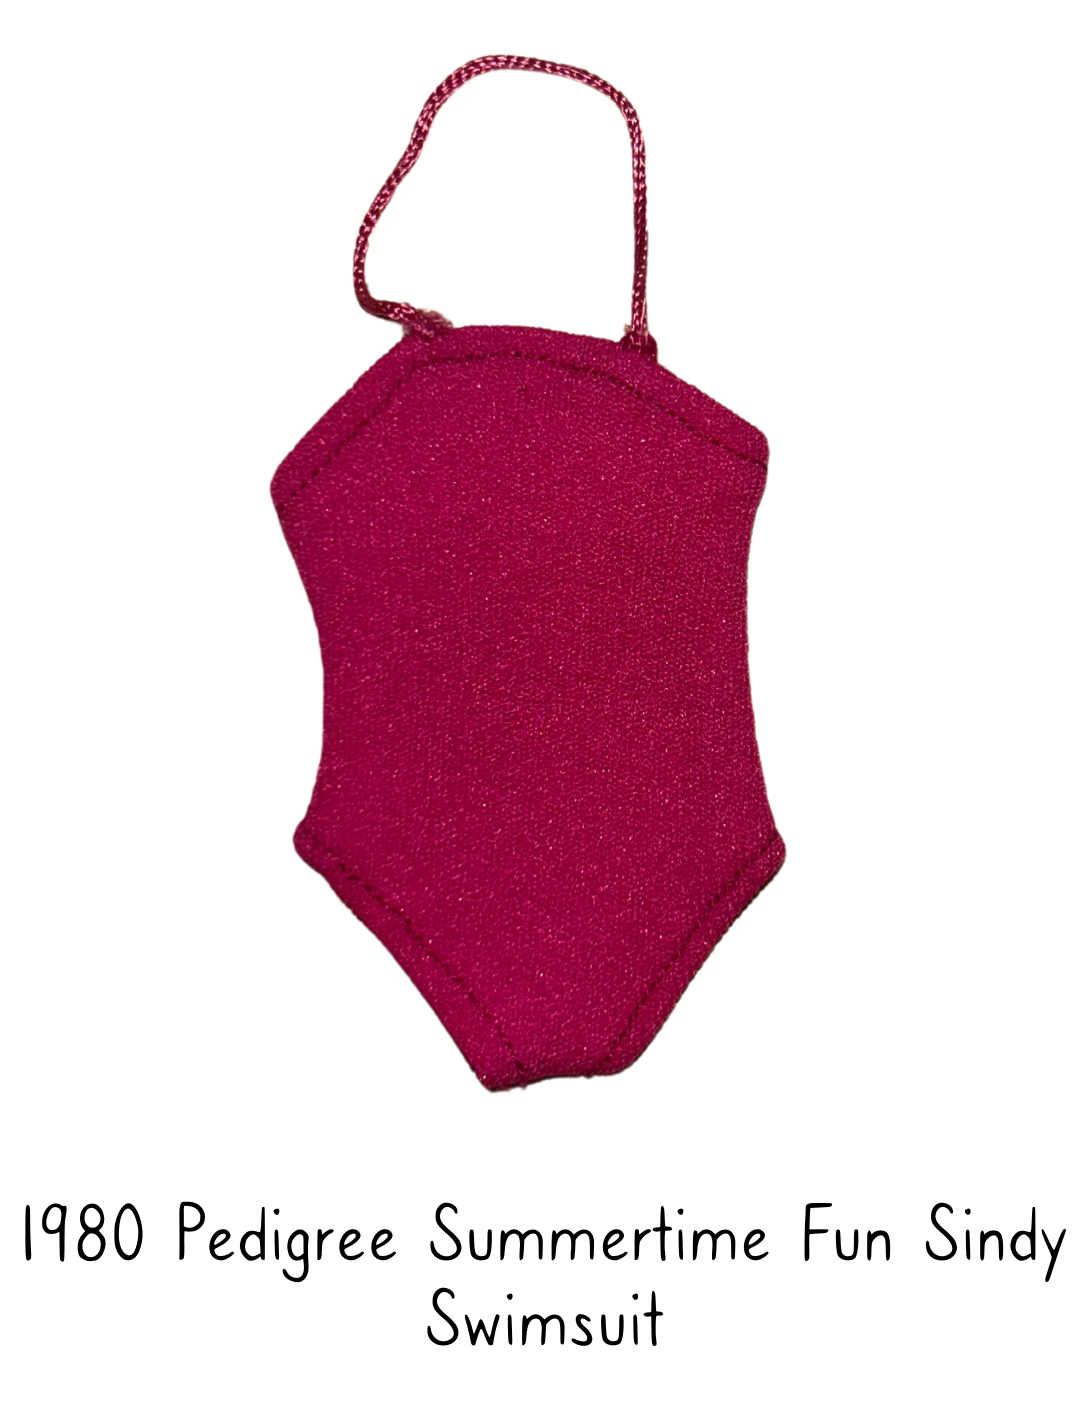 1980 Pedigree Summertime Fun Sindy Swimsuit